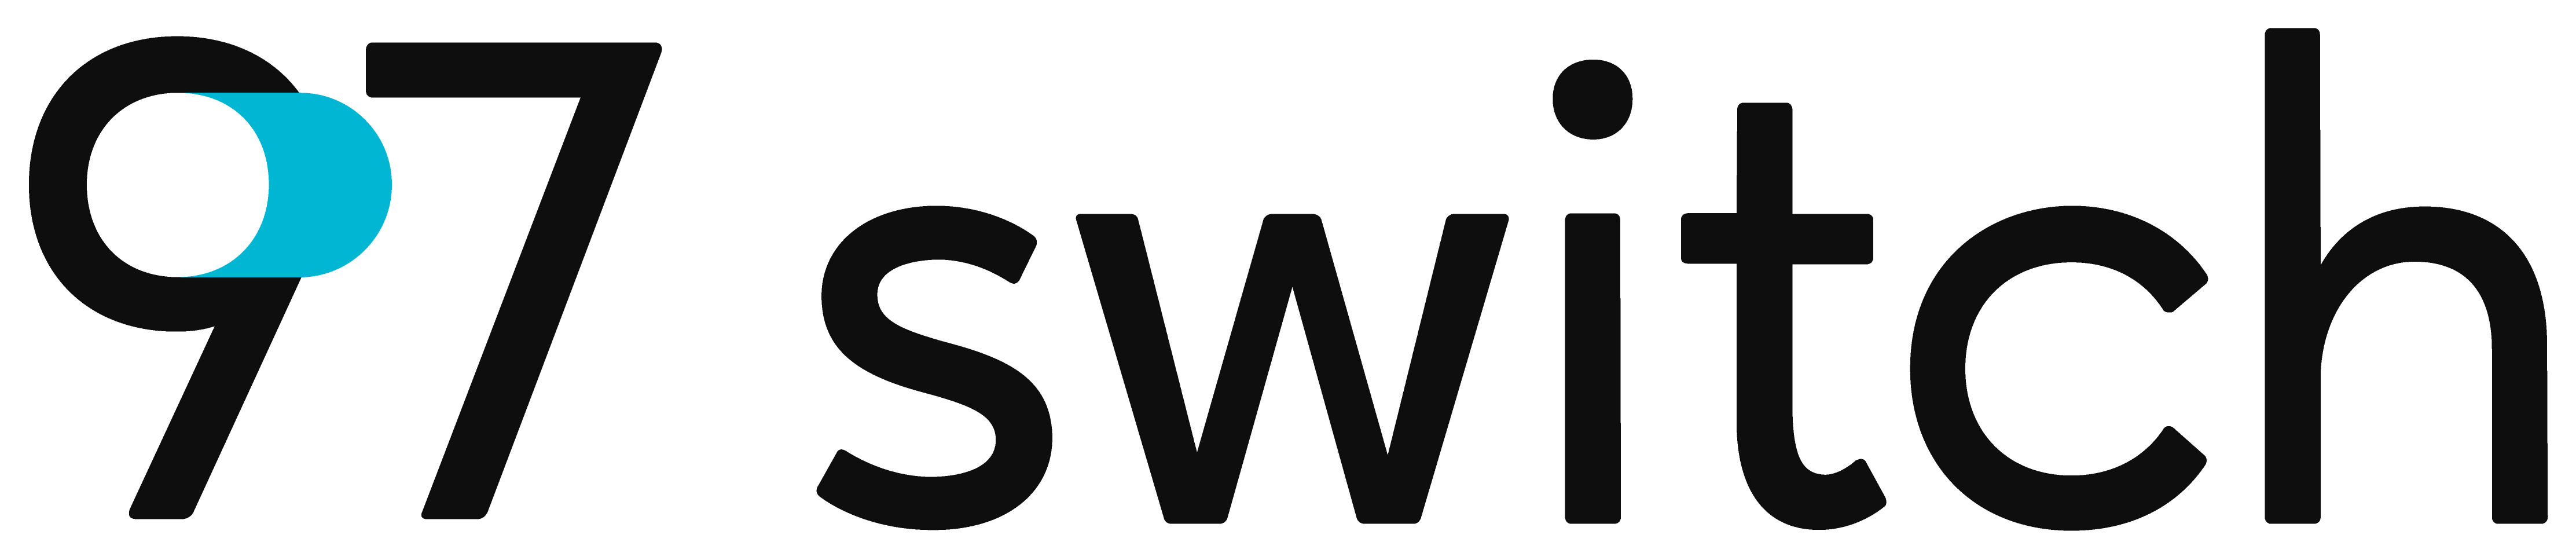 Top BigCommerce Development Company Logo: 97 Switch